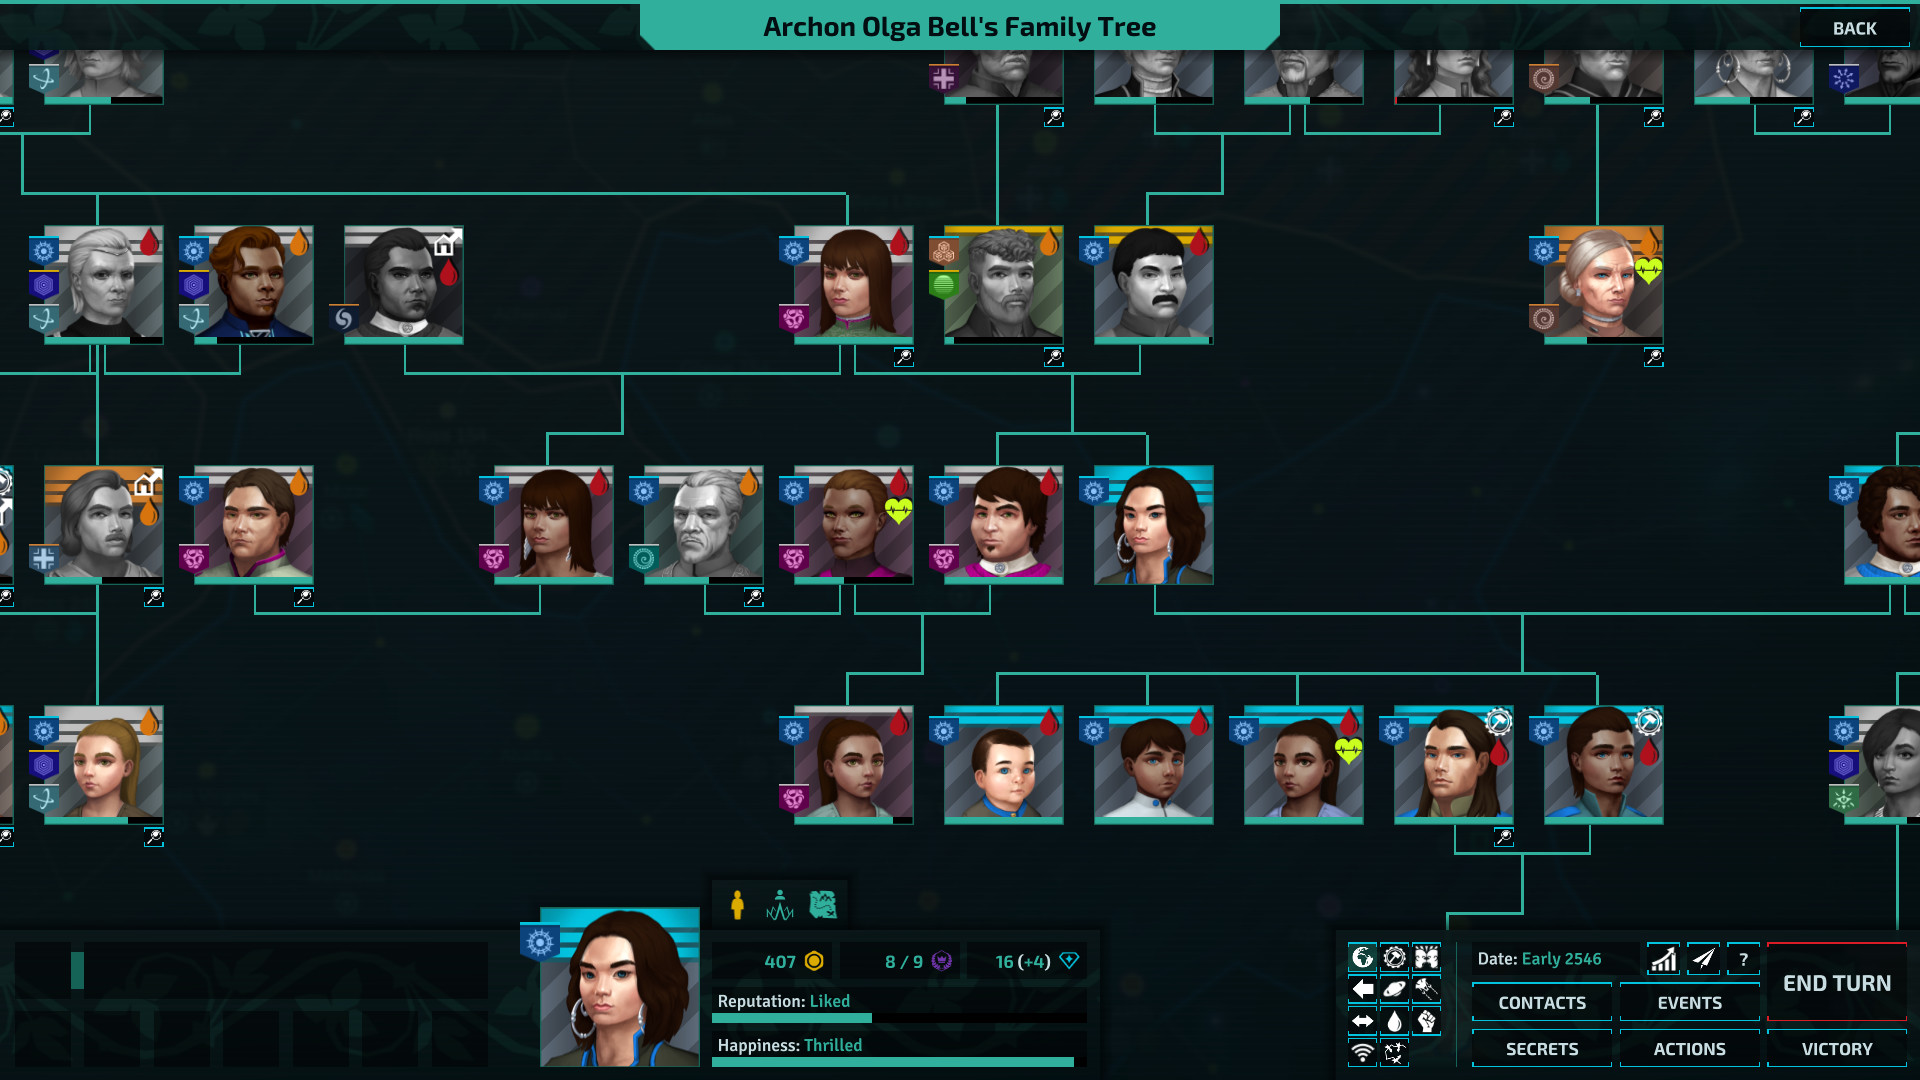 Star Dynasties screenshot